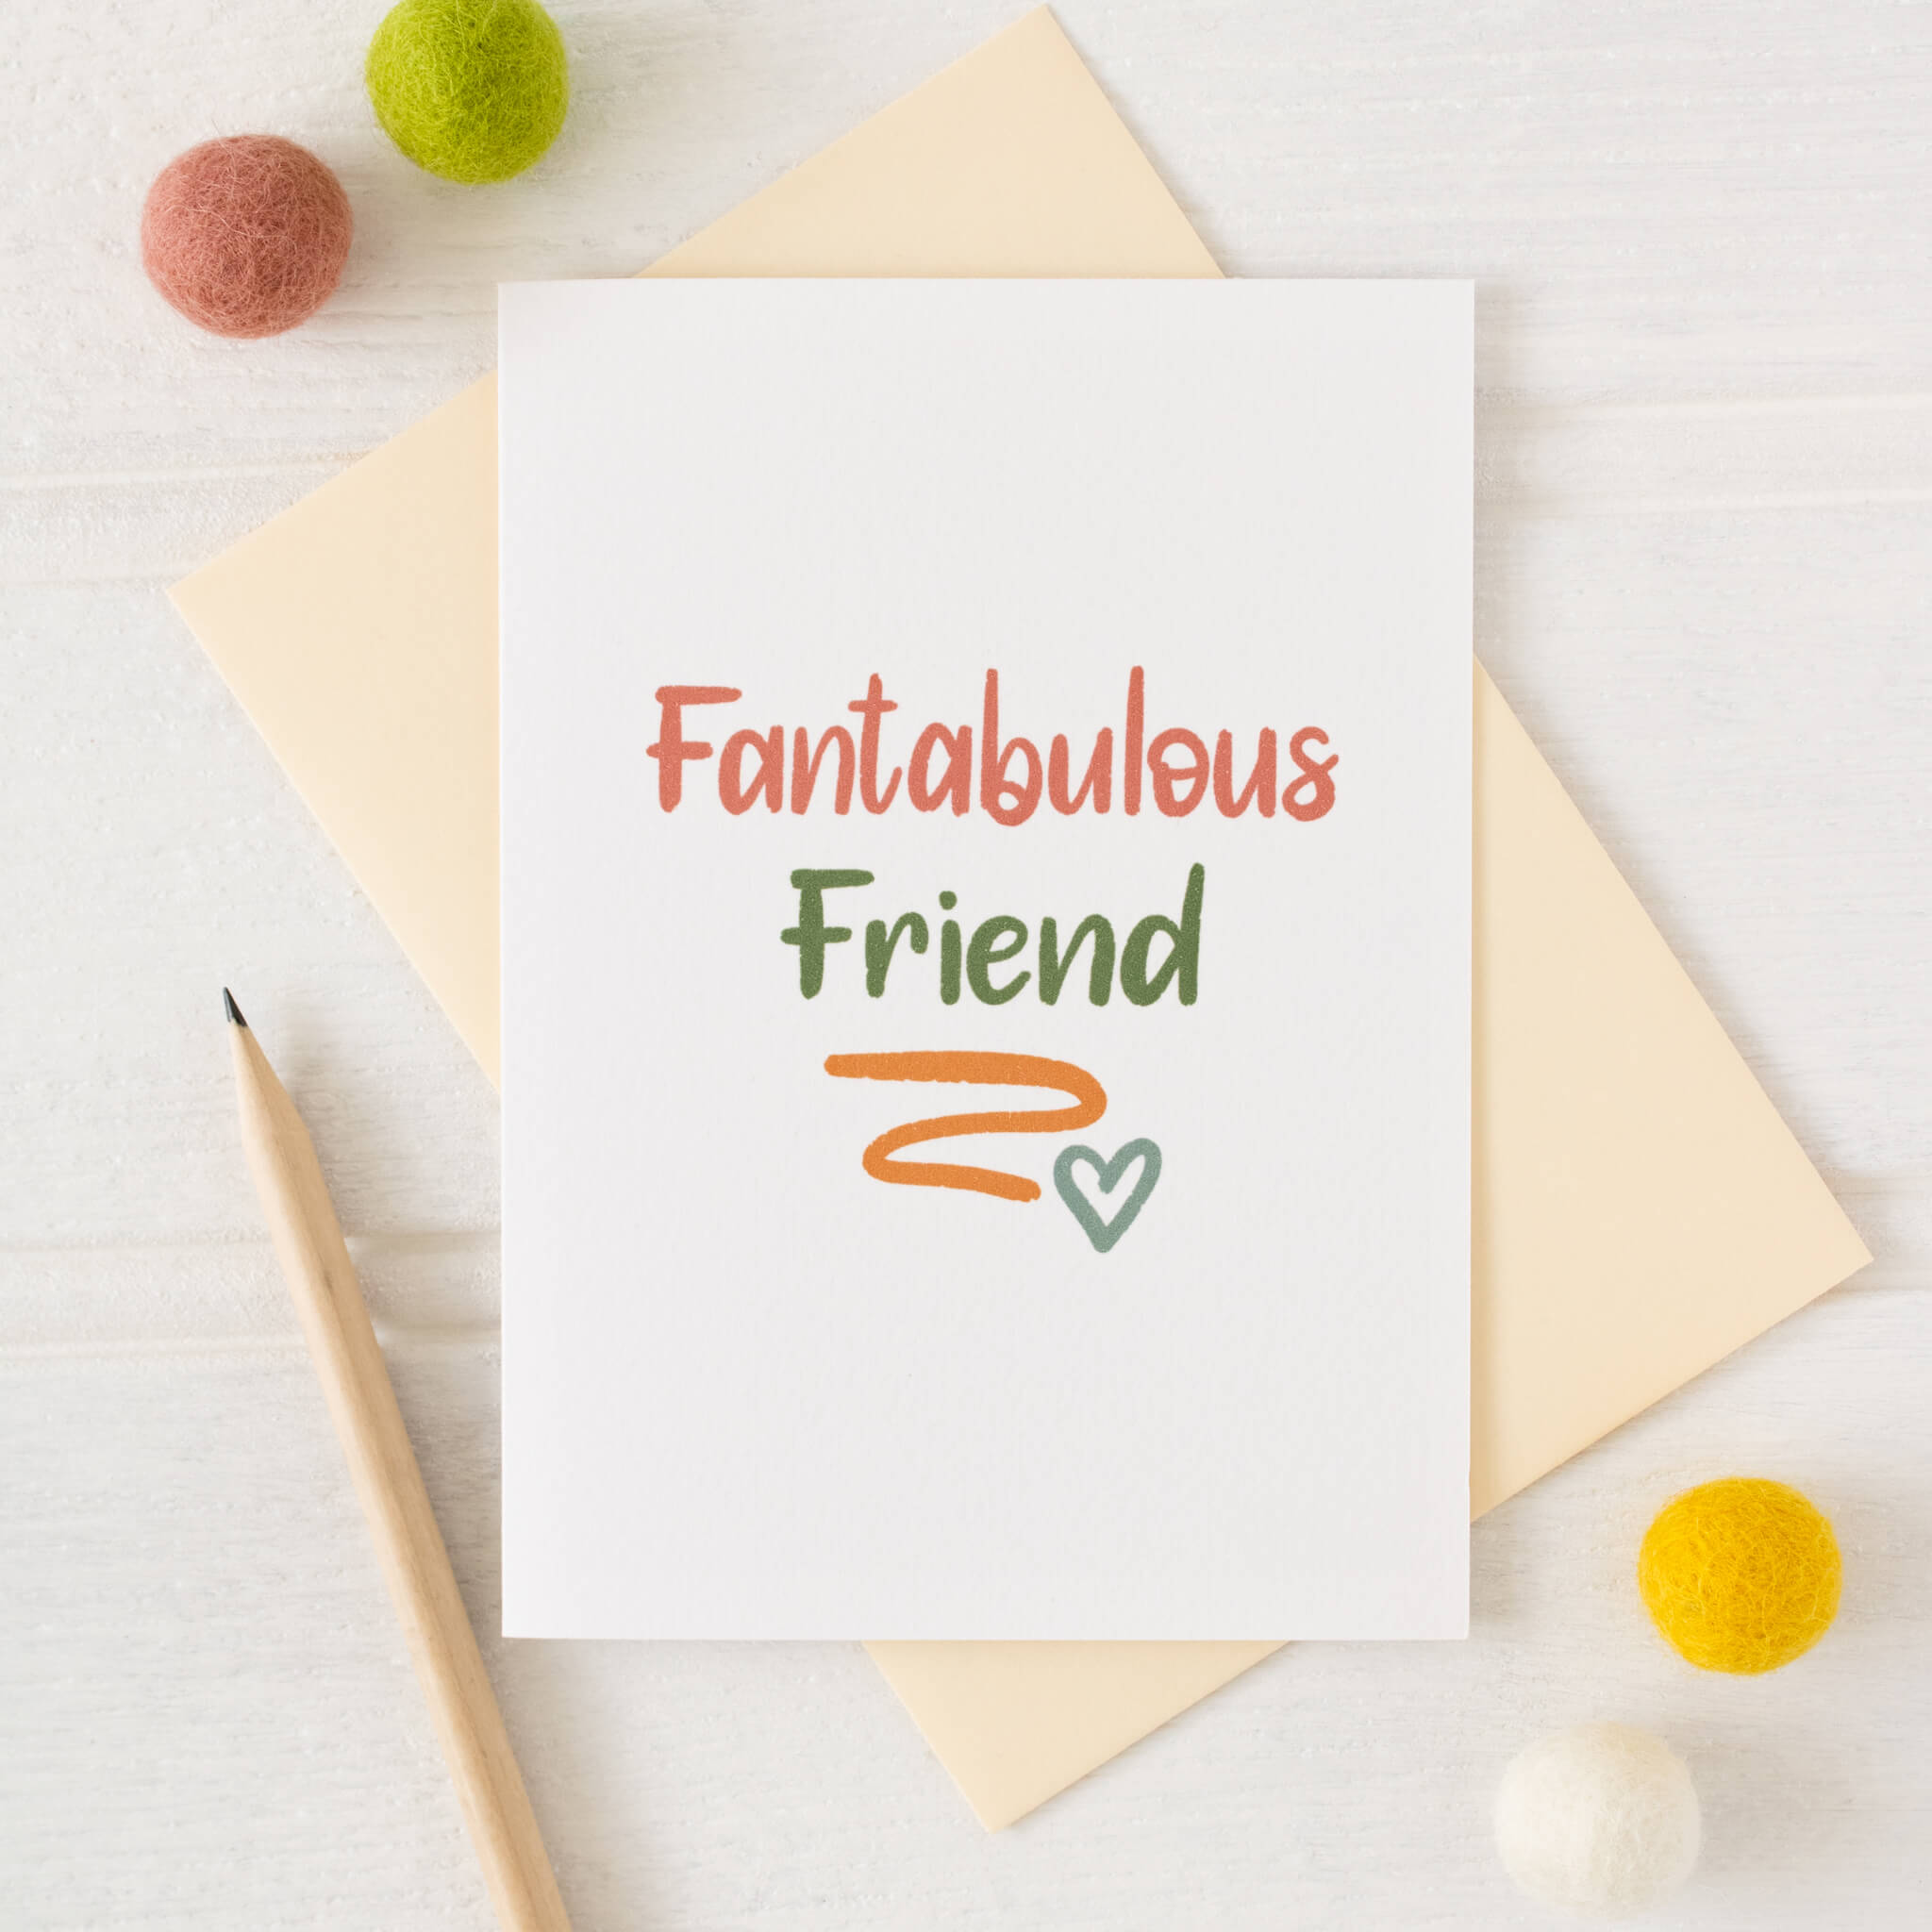 Fantabulous friend friendship card with envelope